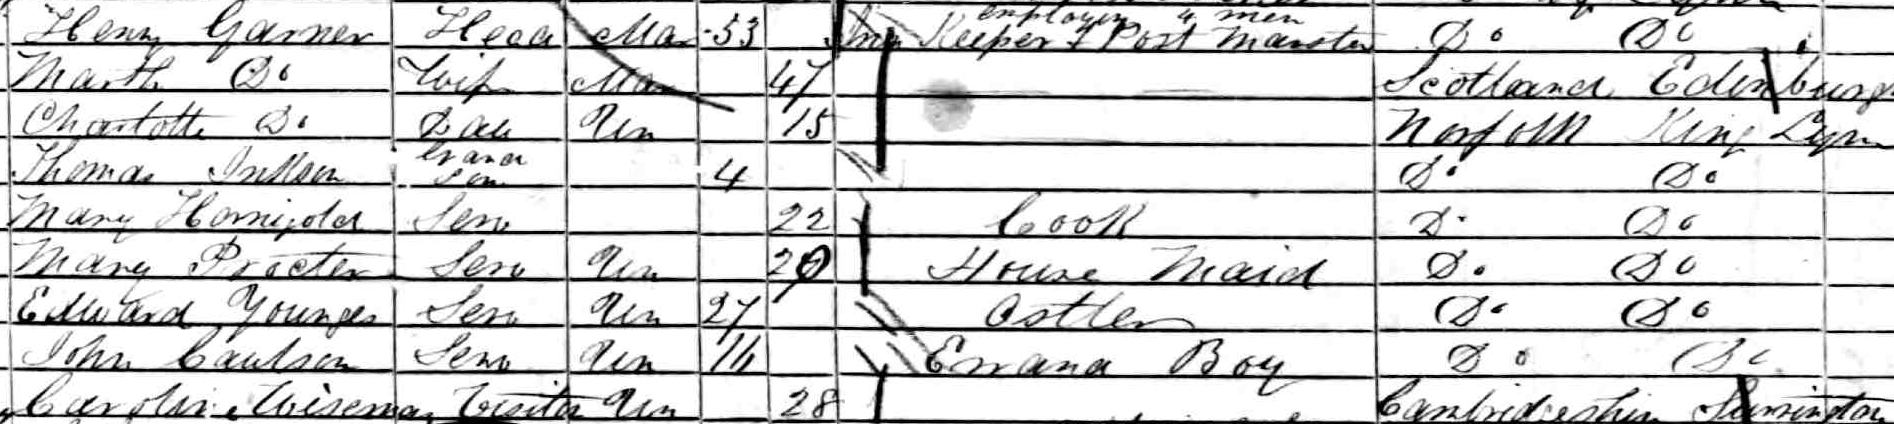 garner 1841 census